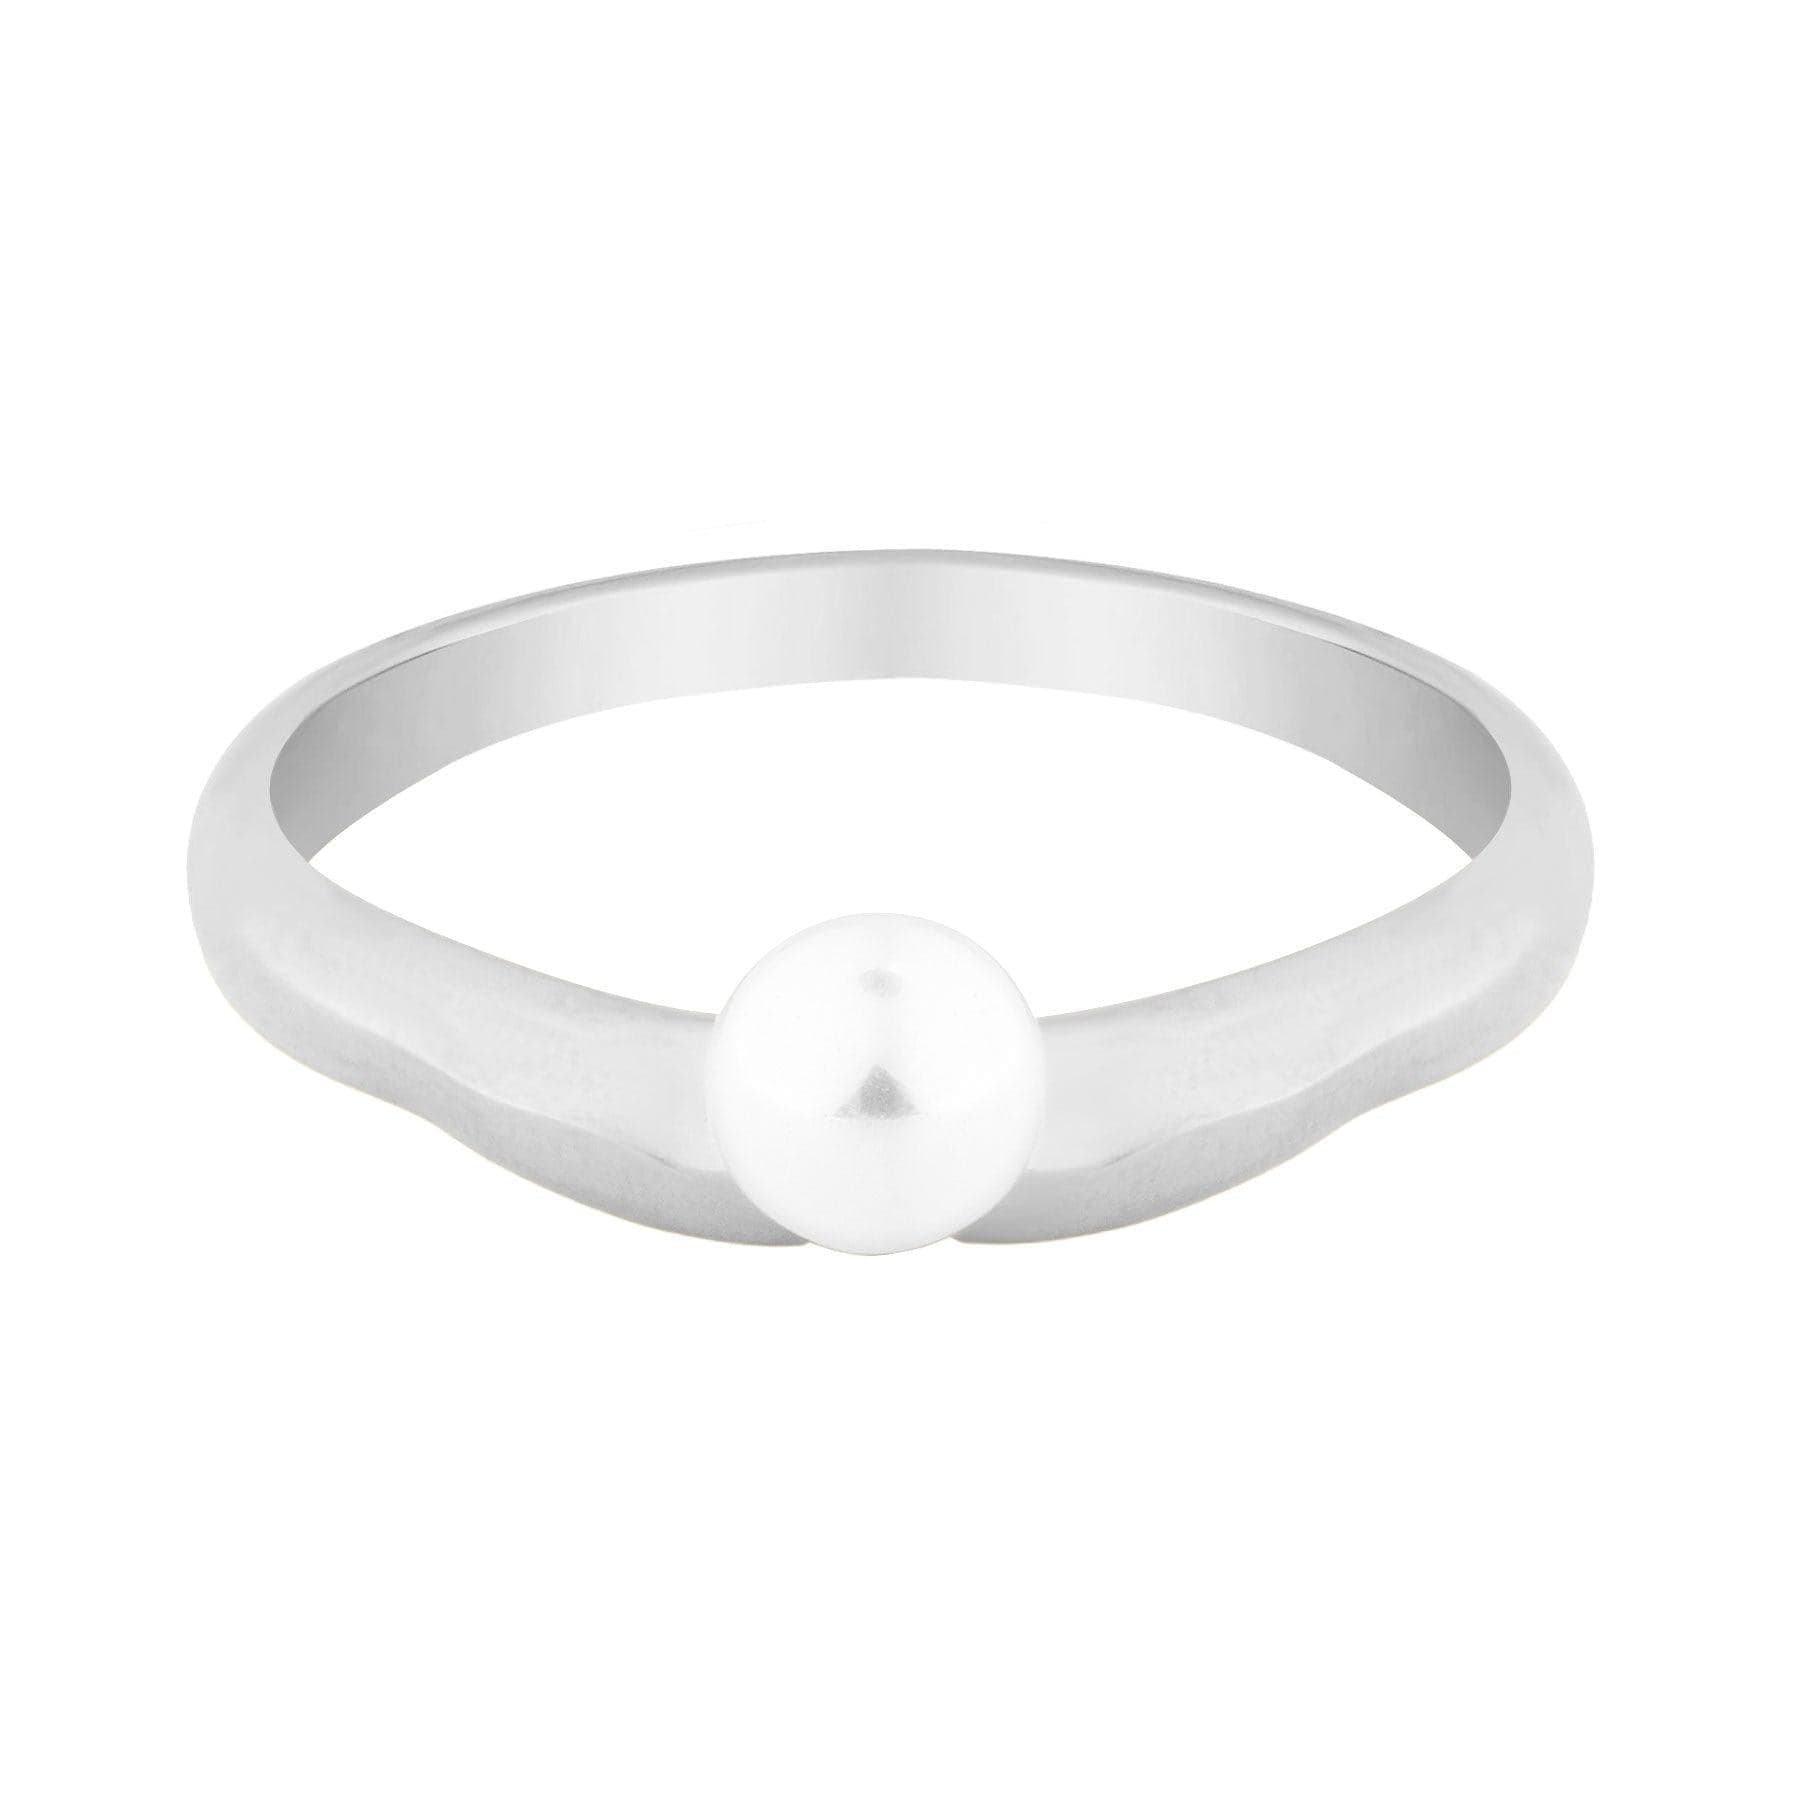 BohoMoon Stainless Steel Amaya Pearl Ring Silver / US 6 / UK L / EUR 51 (small)